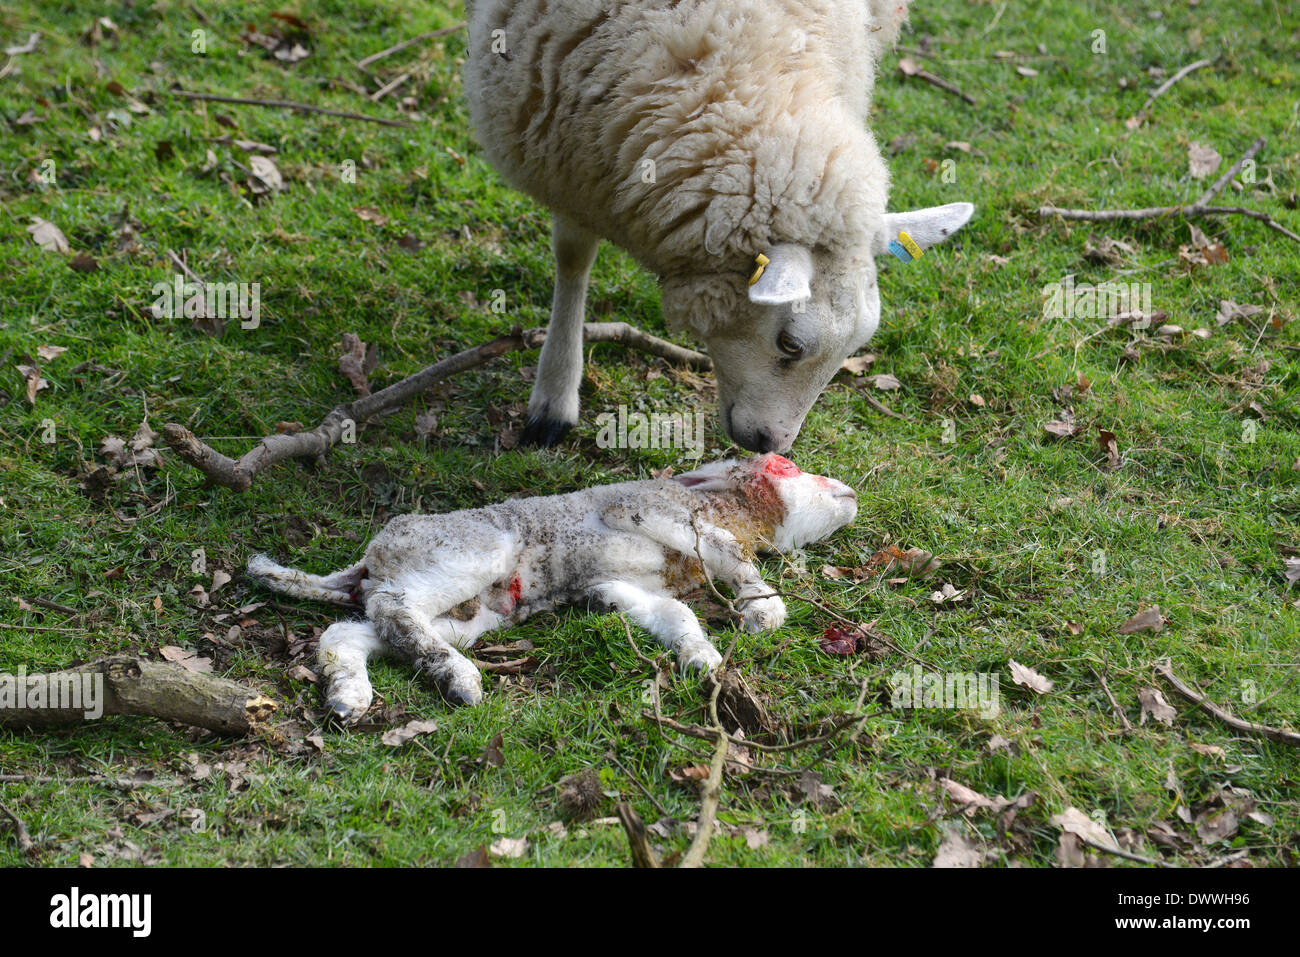 Female sheep ewe standing by her dead baby lamb uk Stock Photo